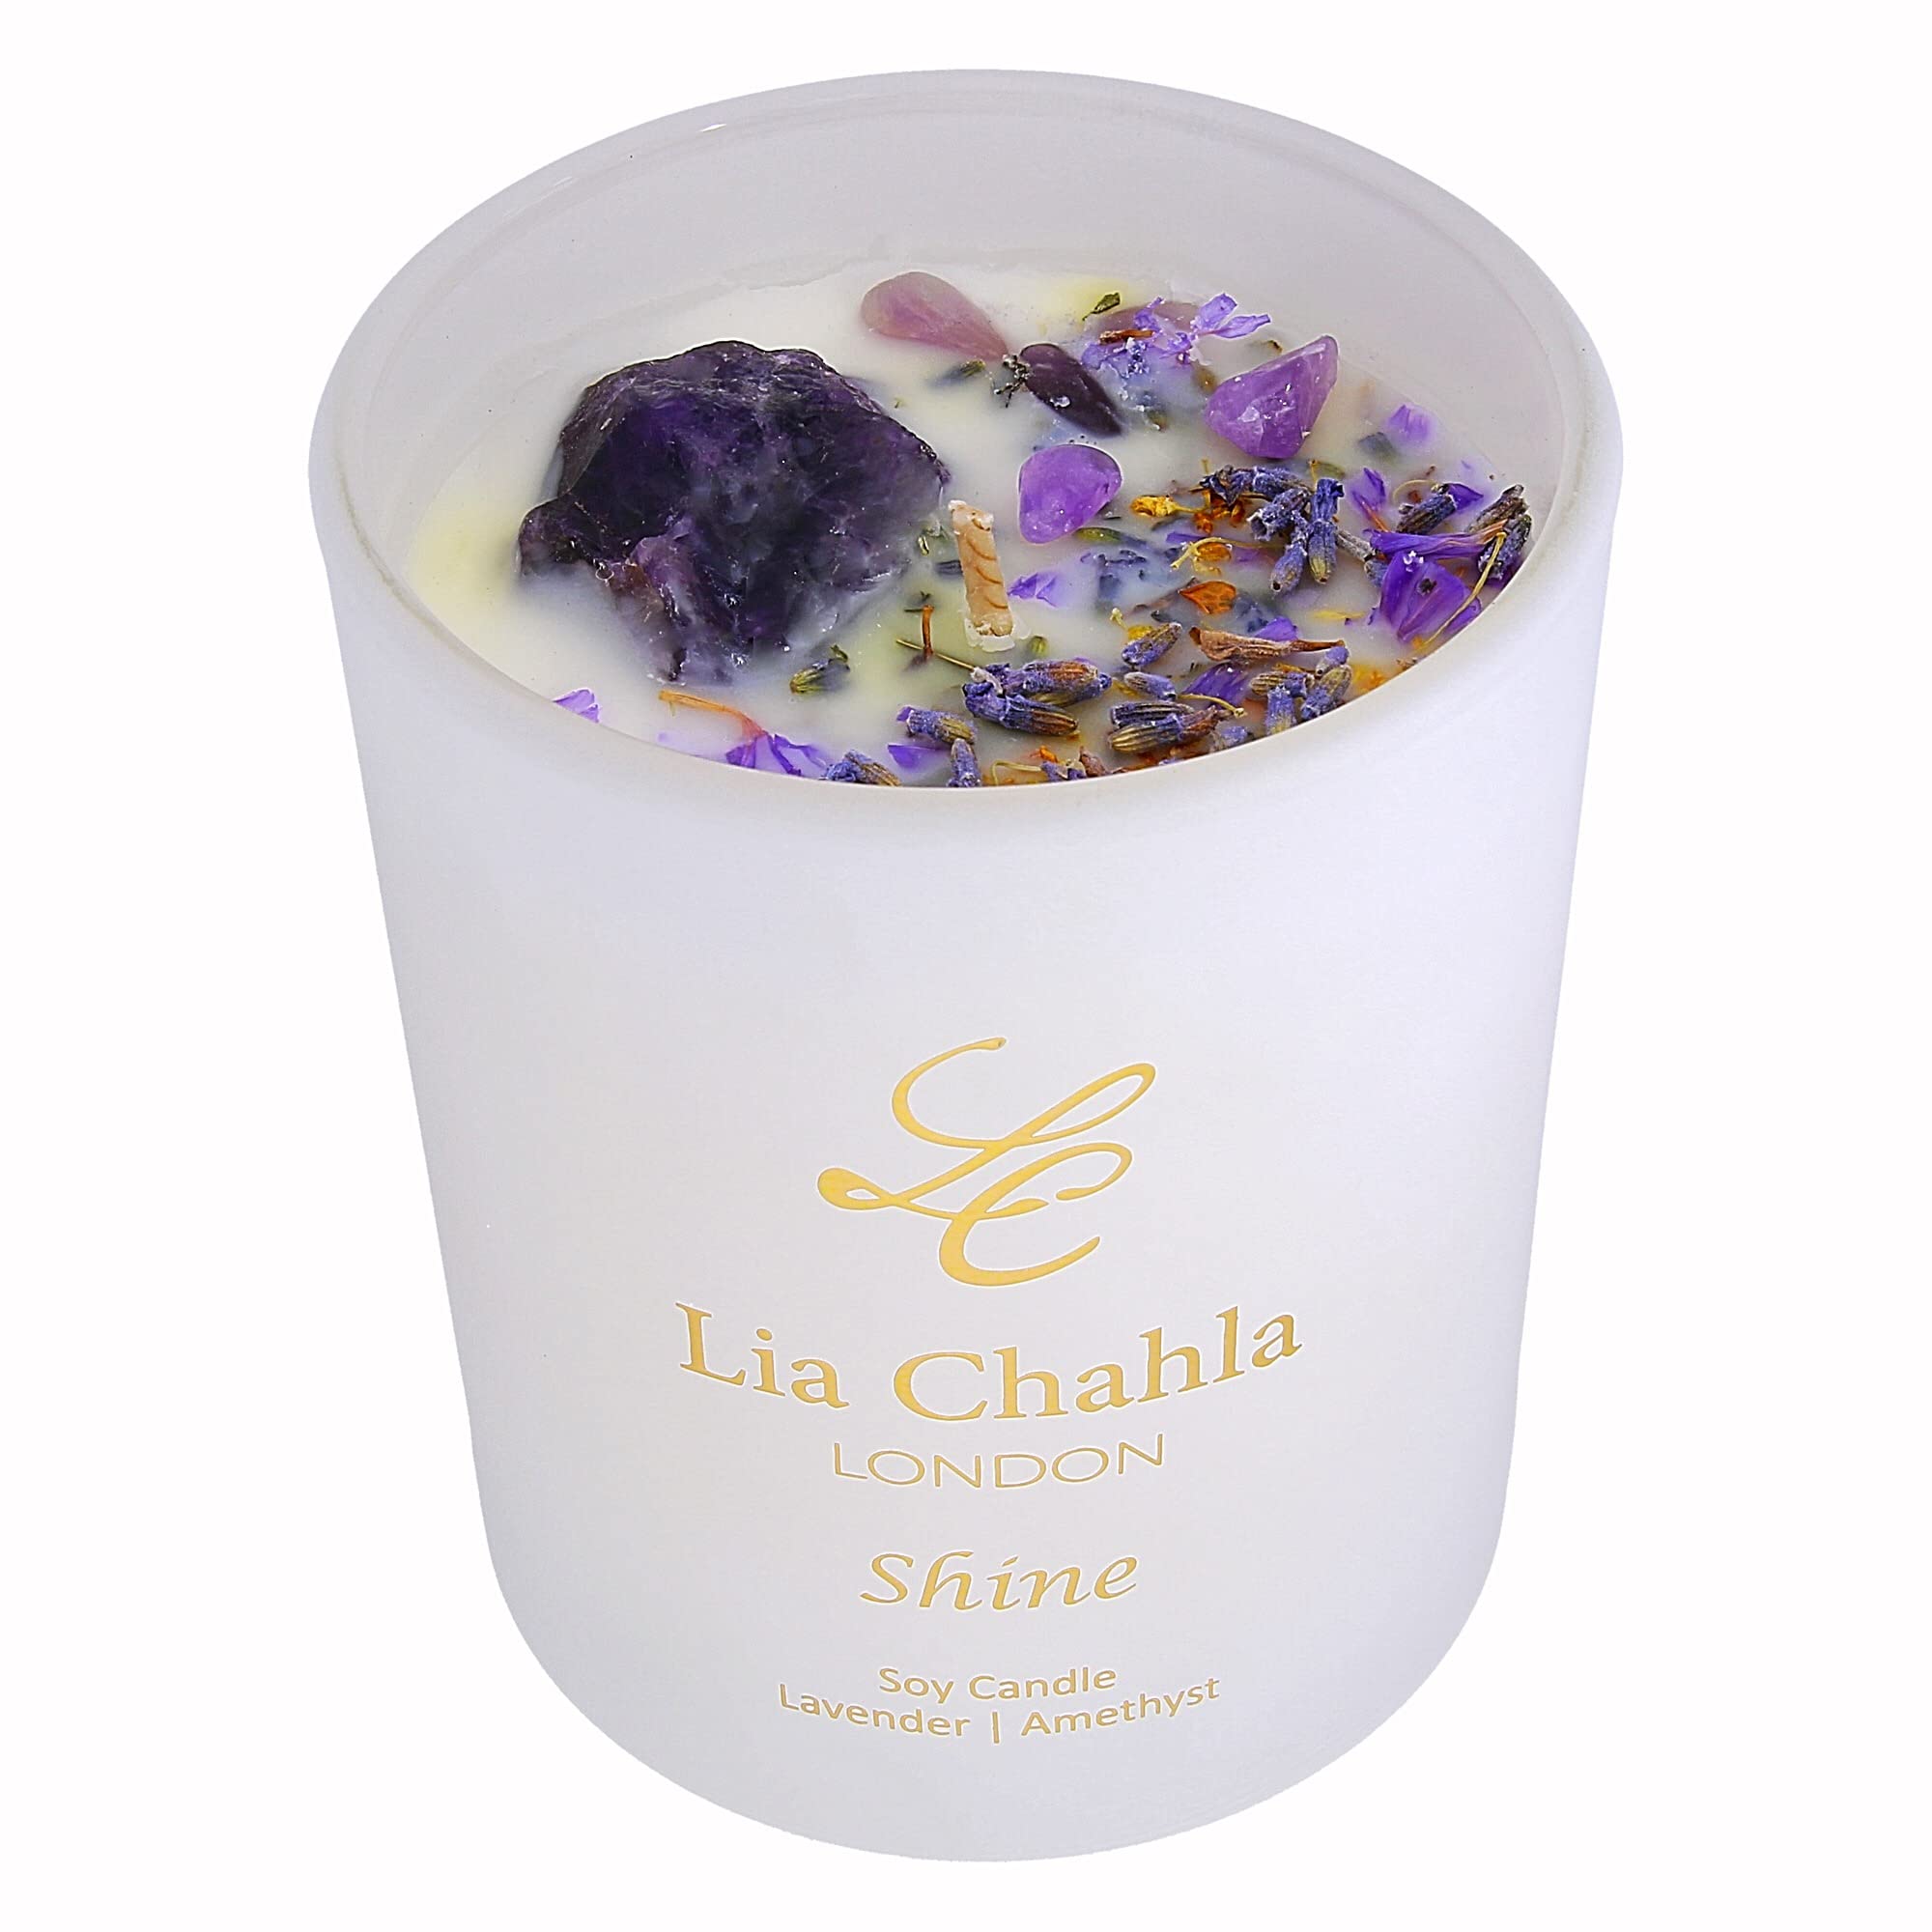 LIA CHAHLA London Lavender Amethyst Candle